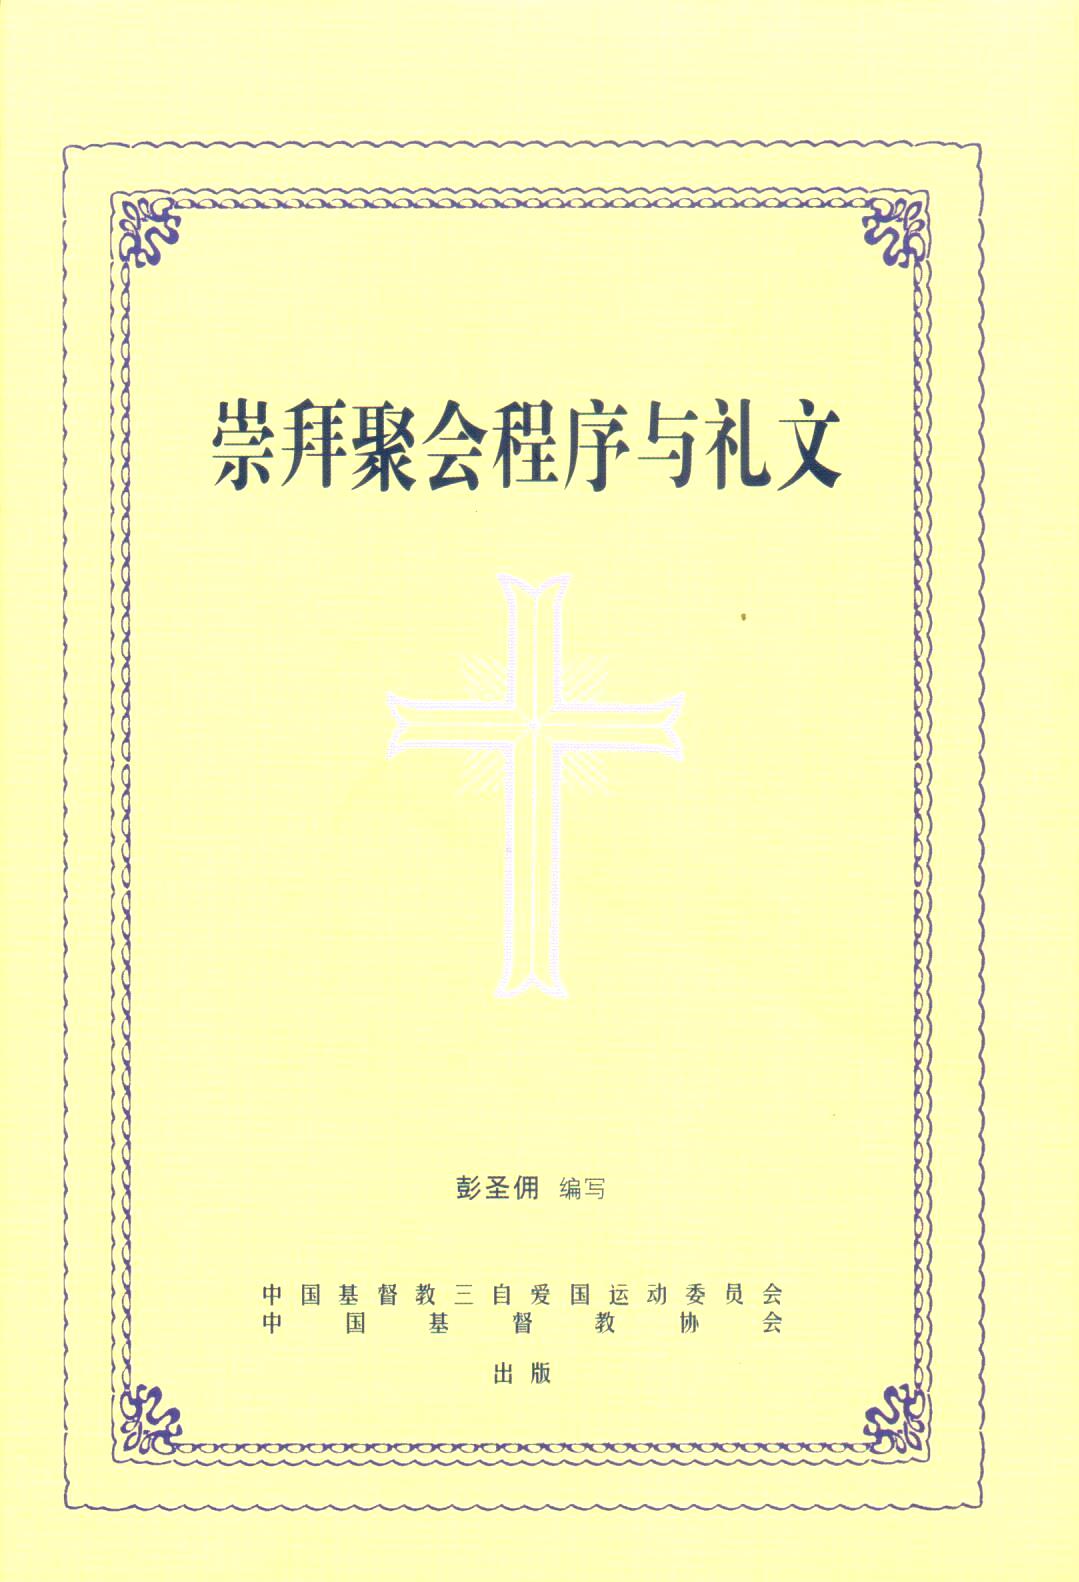 Cover of 崇拜聚會程序與禮文